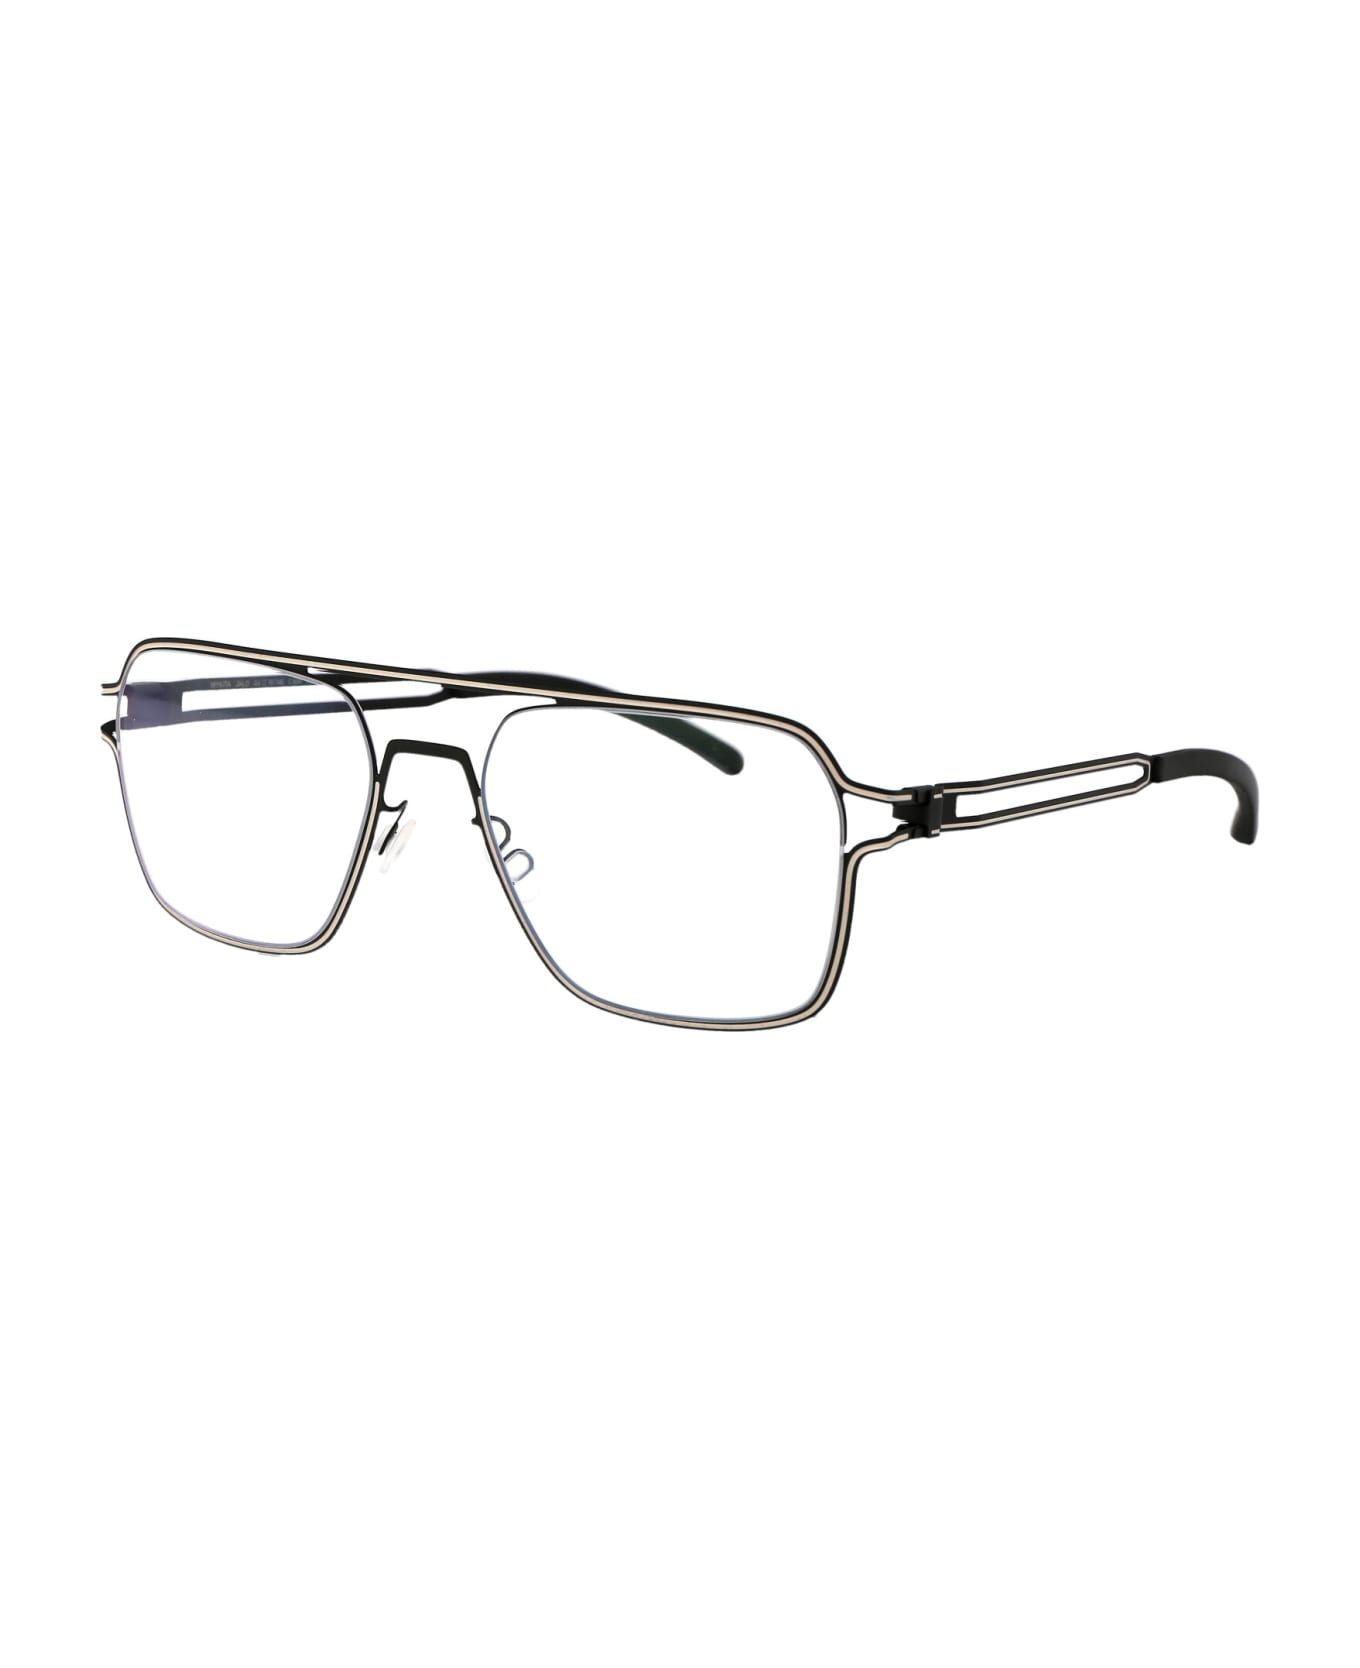 Mykita Jalo Glasses - 634 Black Light Warm Grey|Clear アイウェア